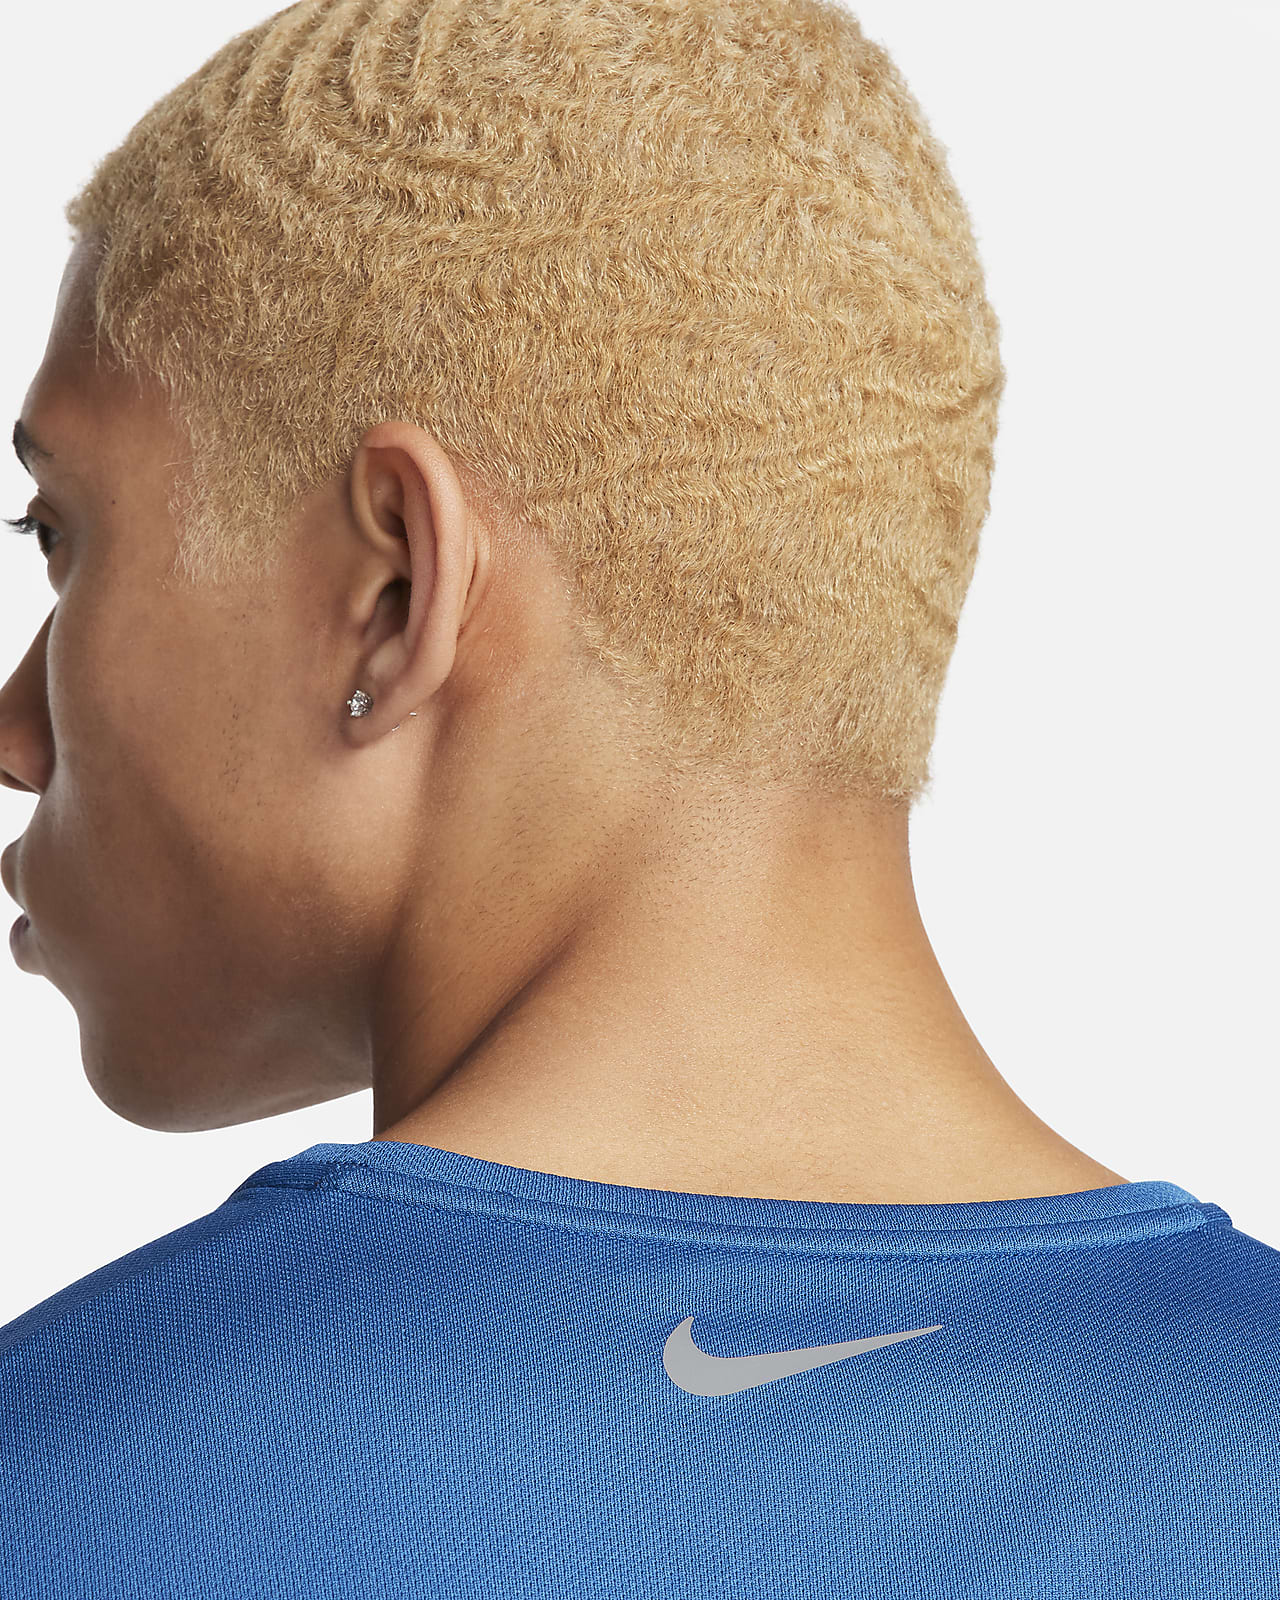 Camiseta transpirable en azul 833591-497 Miler de Nike Running